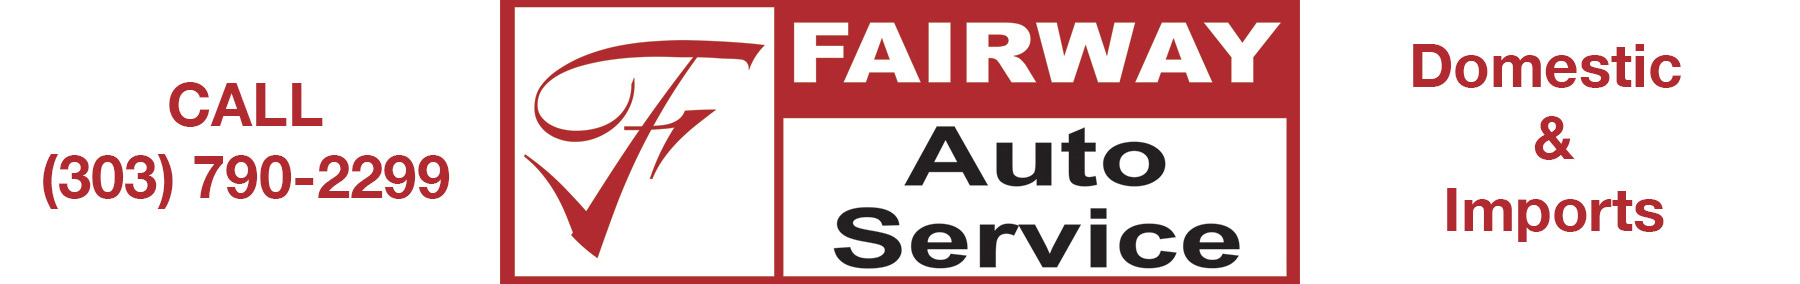 Fairway Auto Service estimates